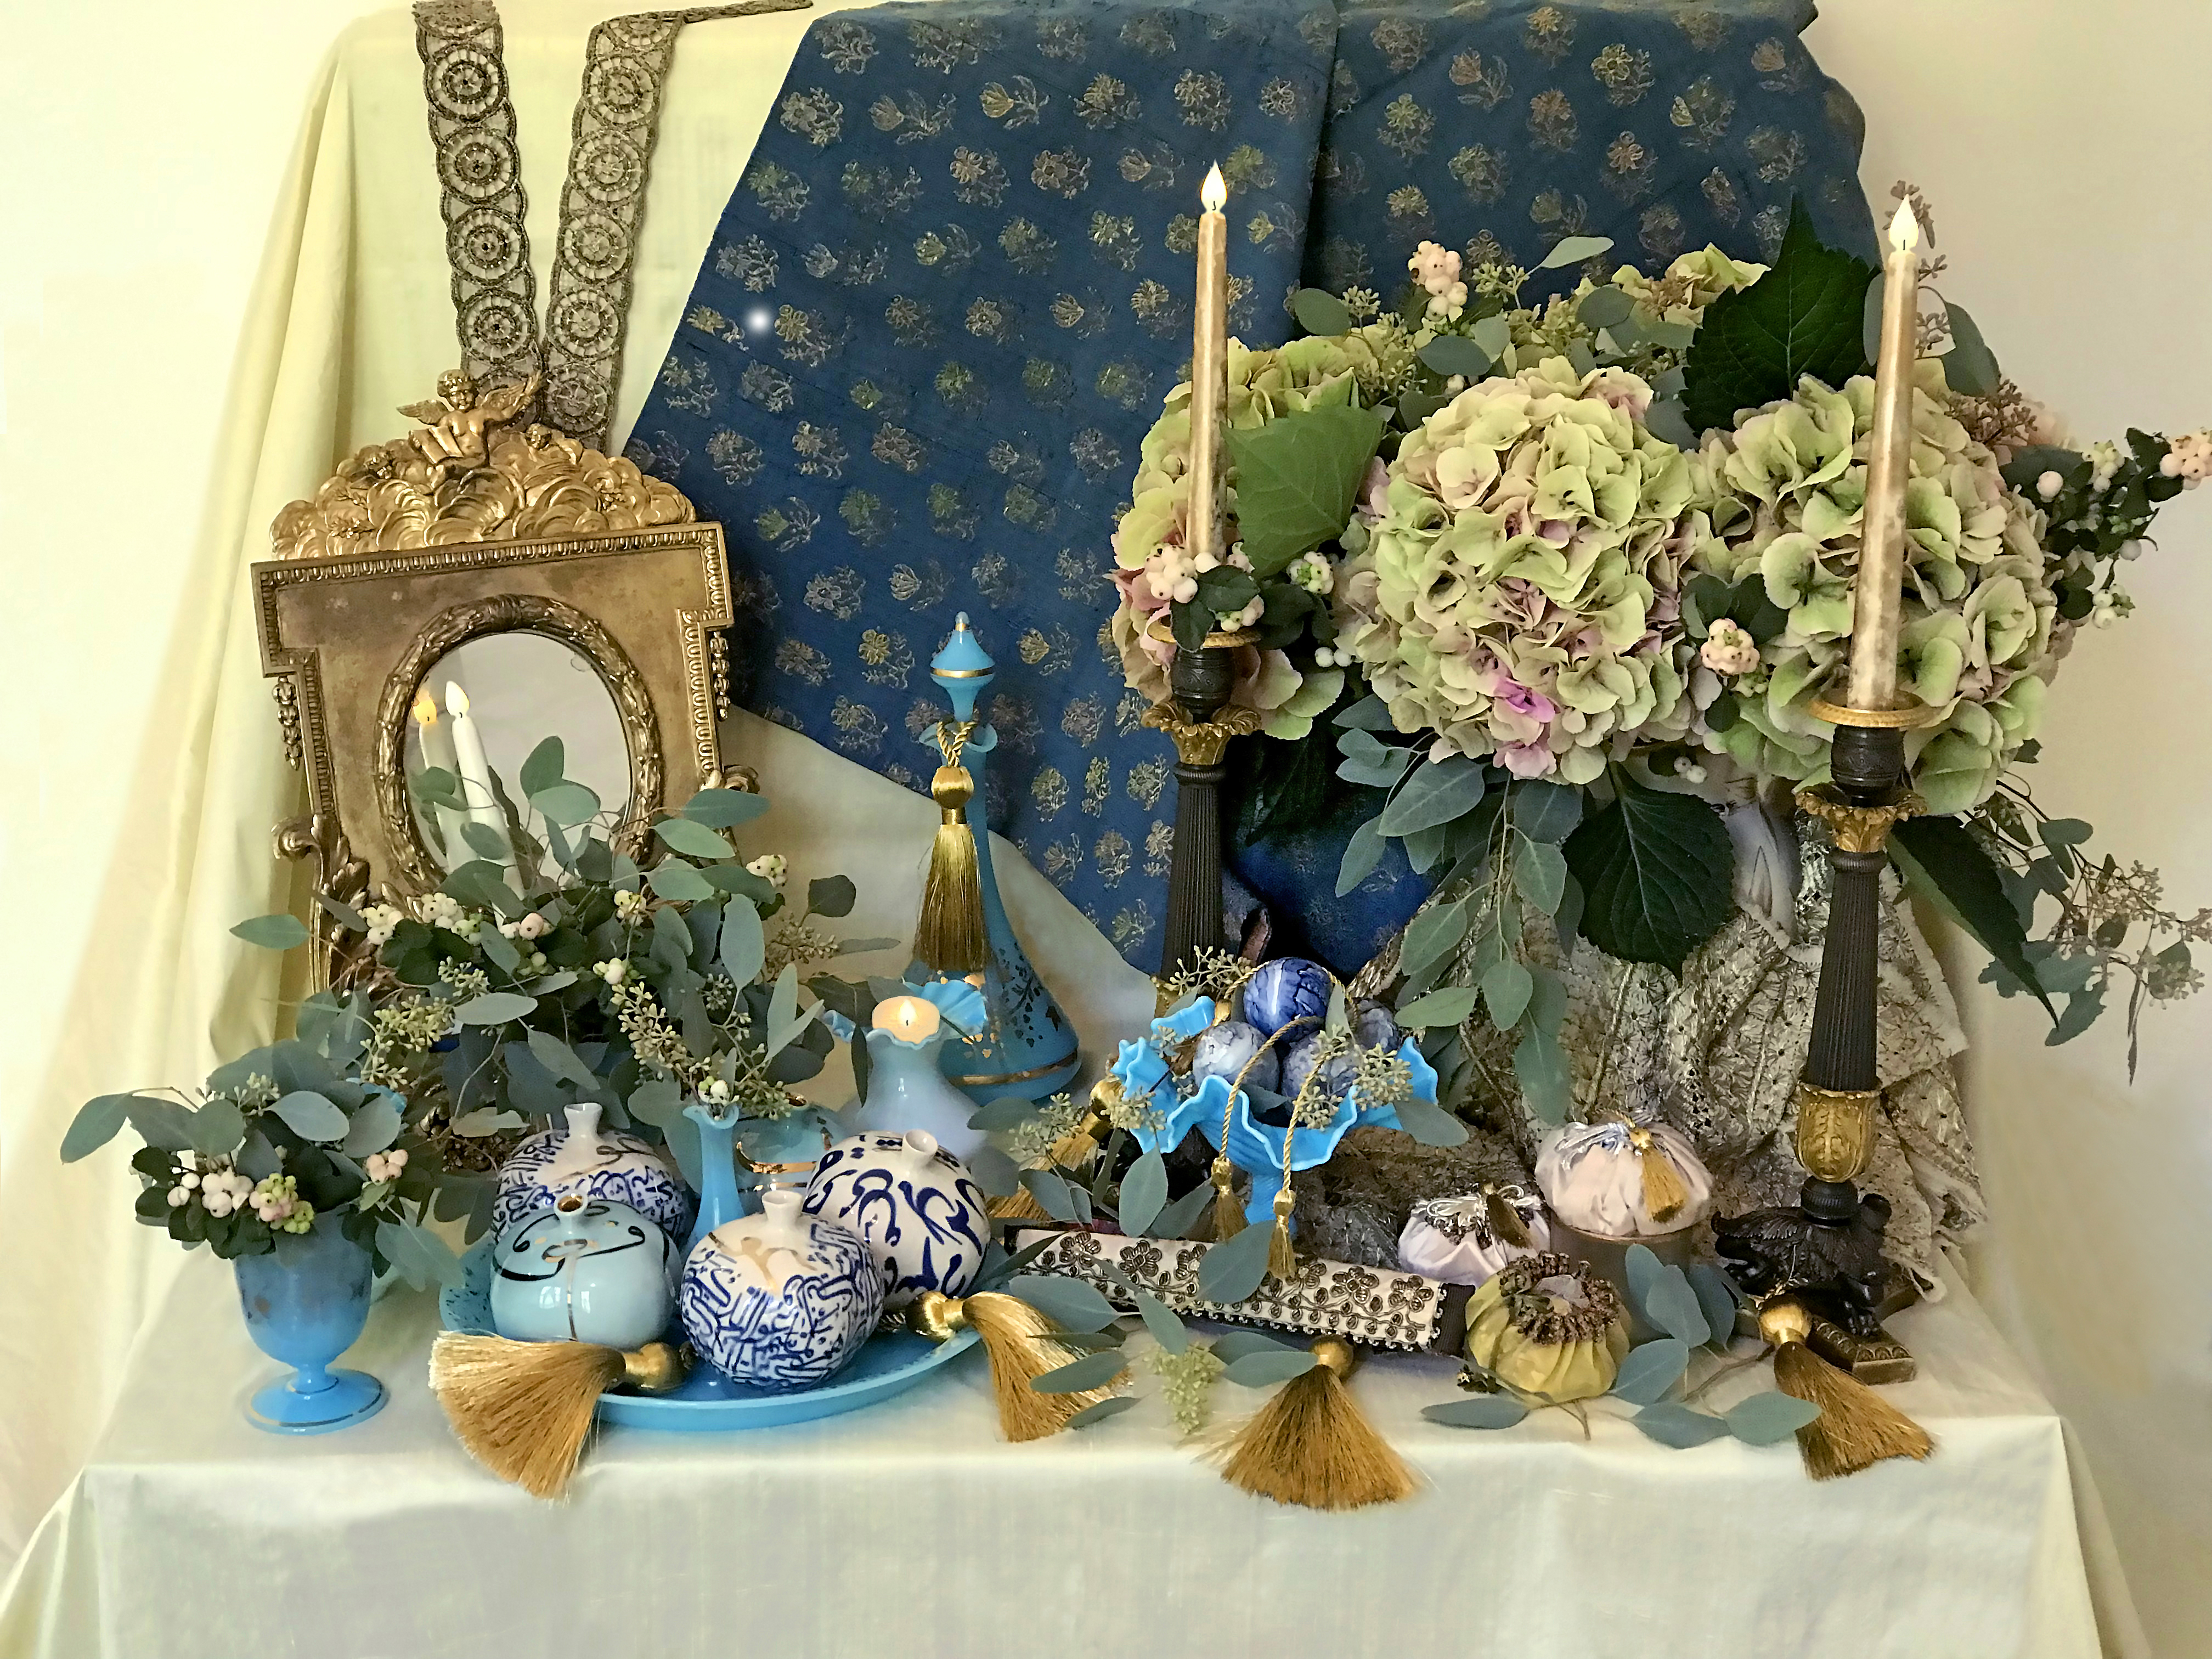 mirror, candelabra, pomegranates, decorated eggs, flasks of rosewater and handmade bonbonnières